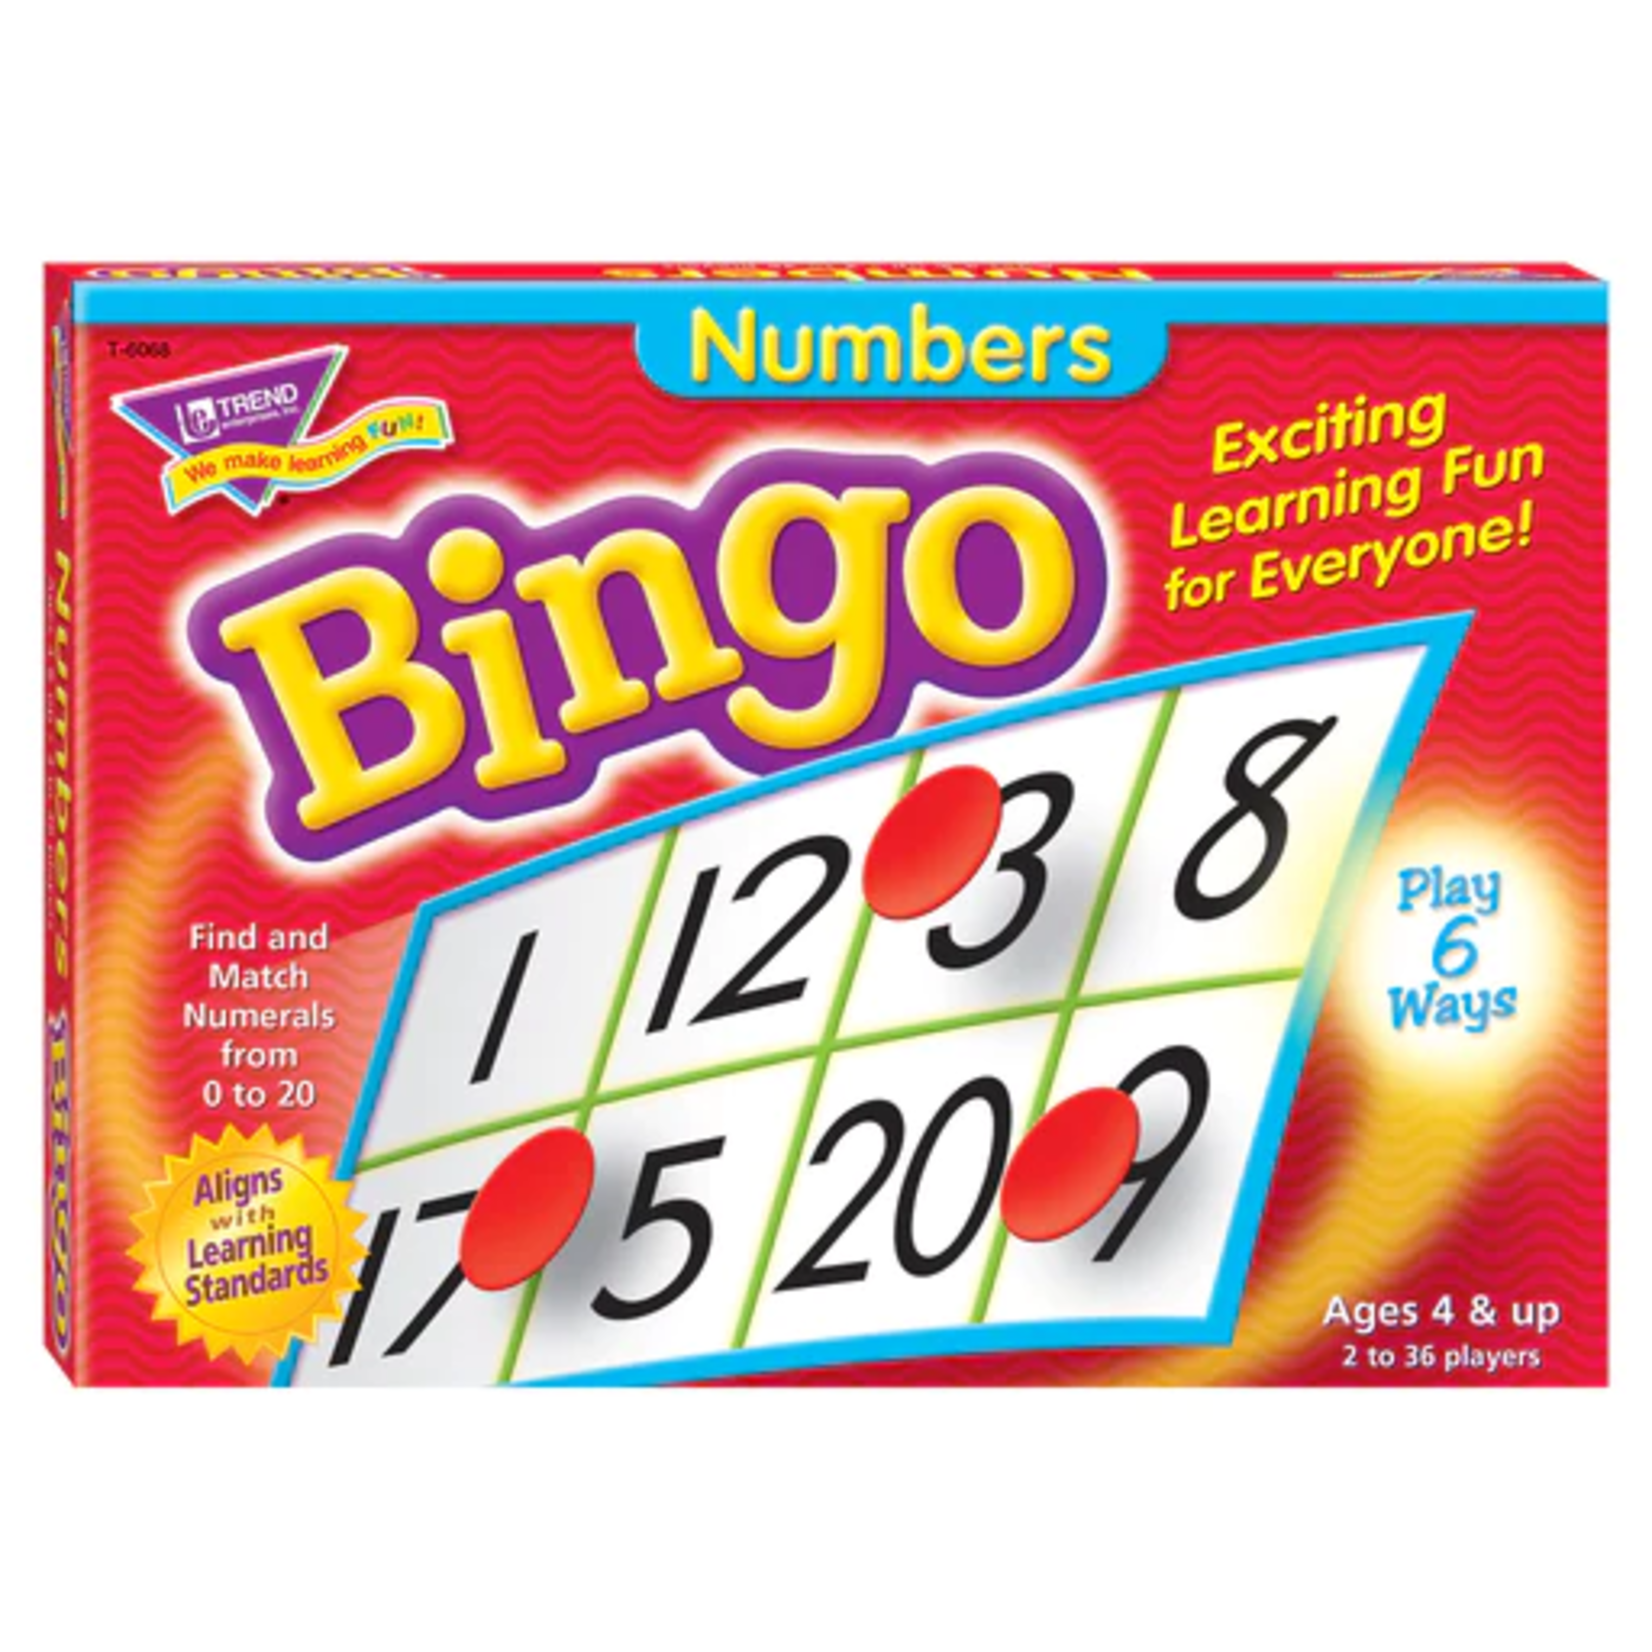 TREND ENTERPRISES INC Numbers Bingo Game